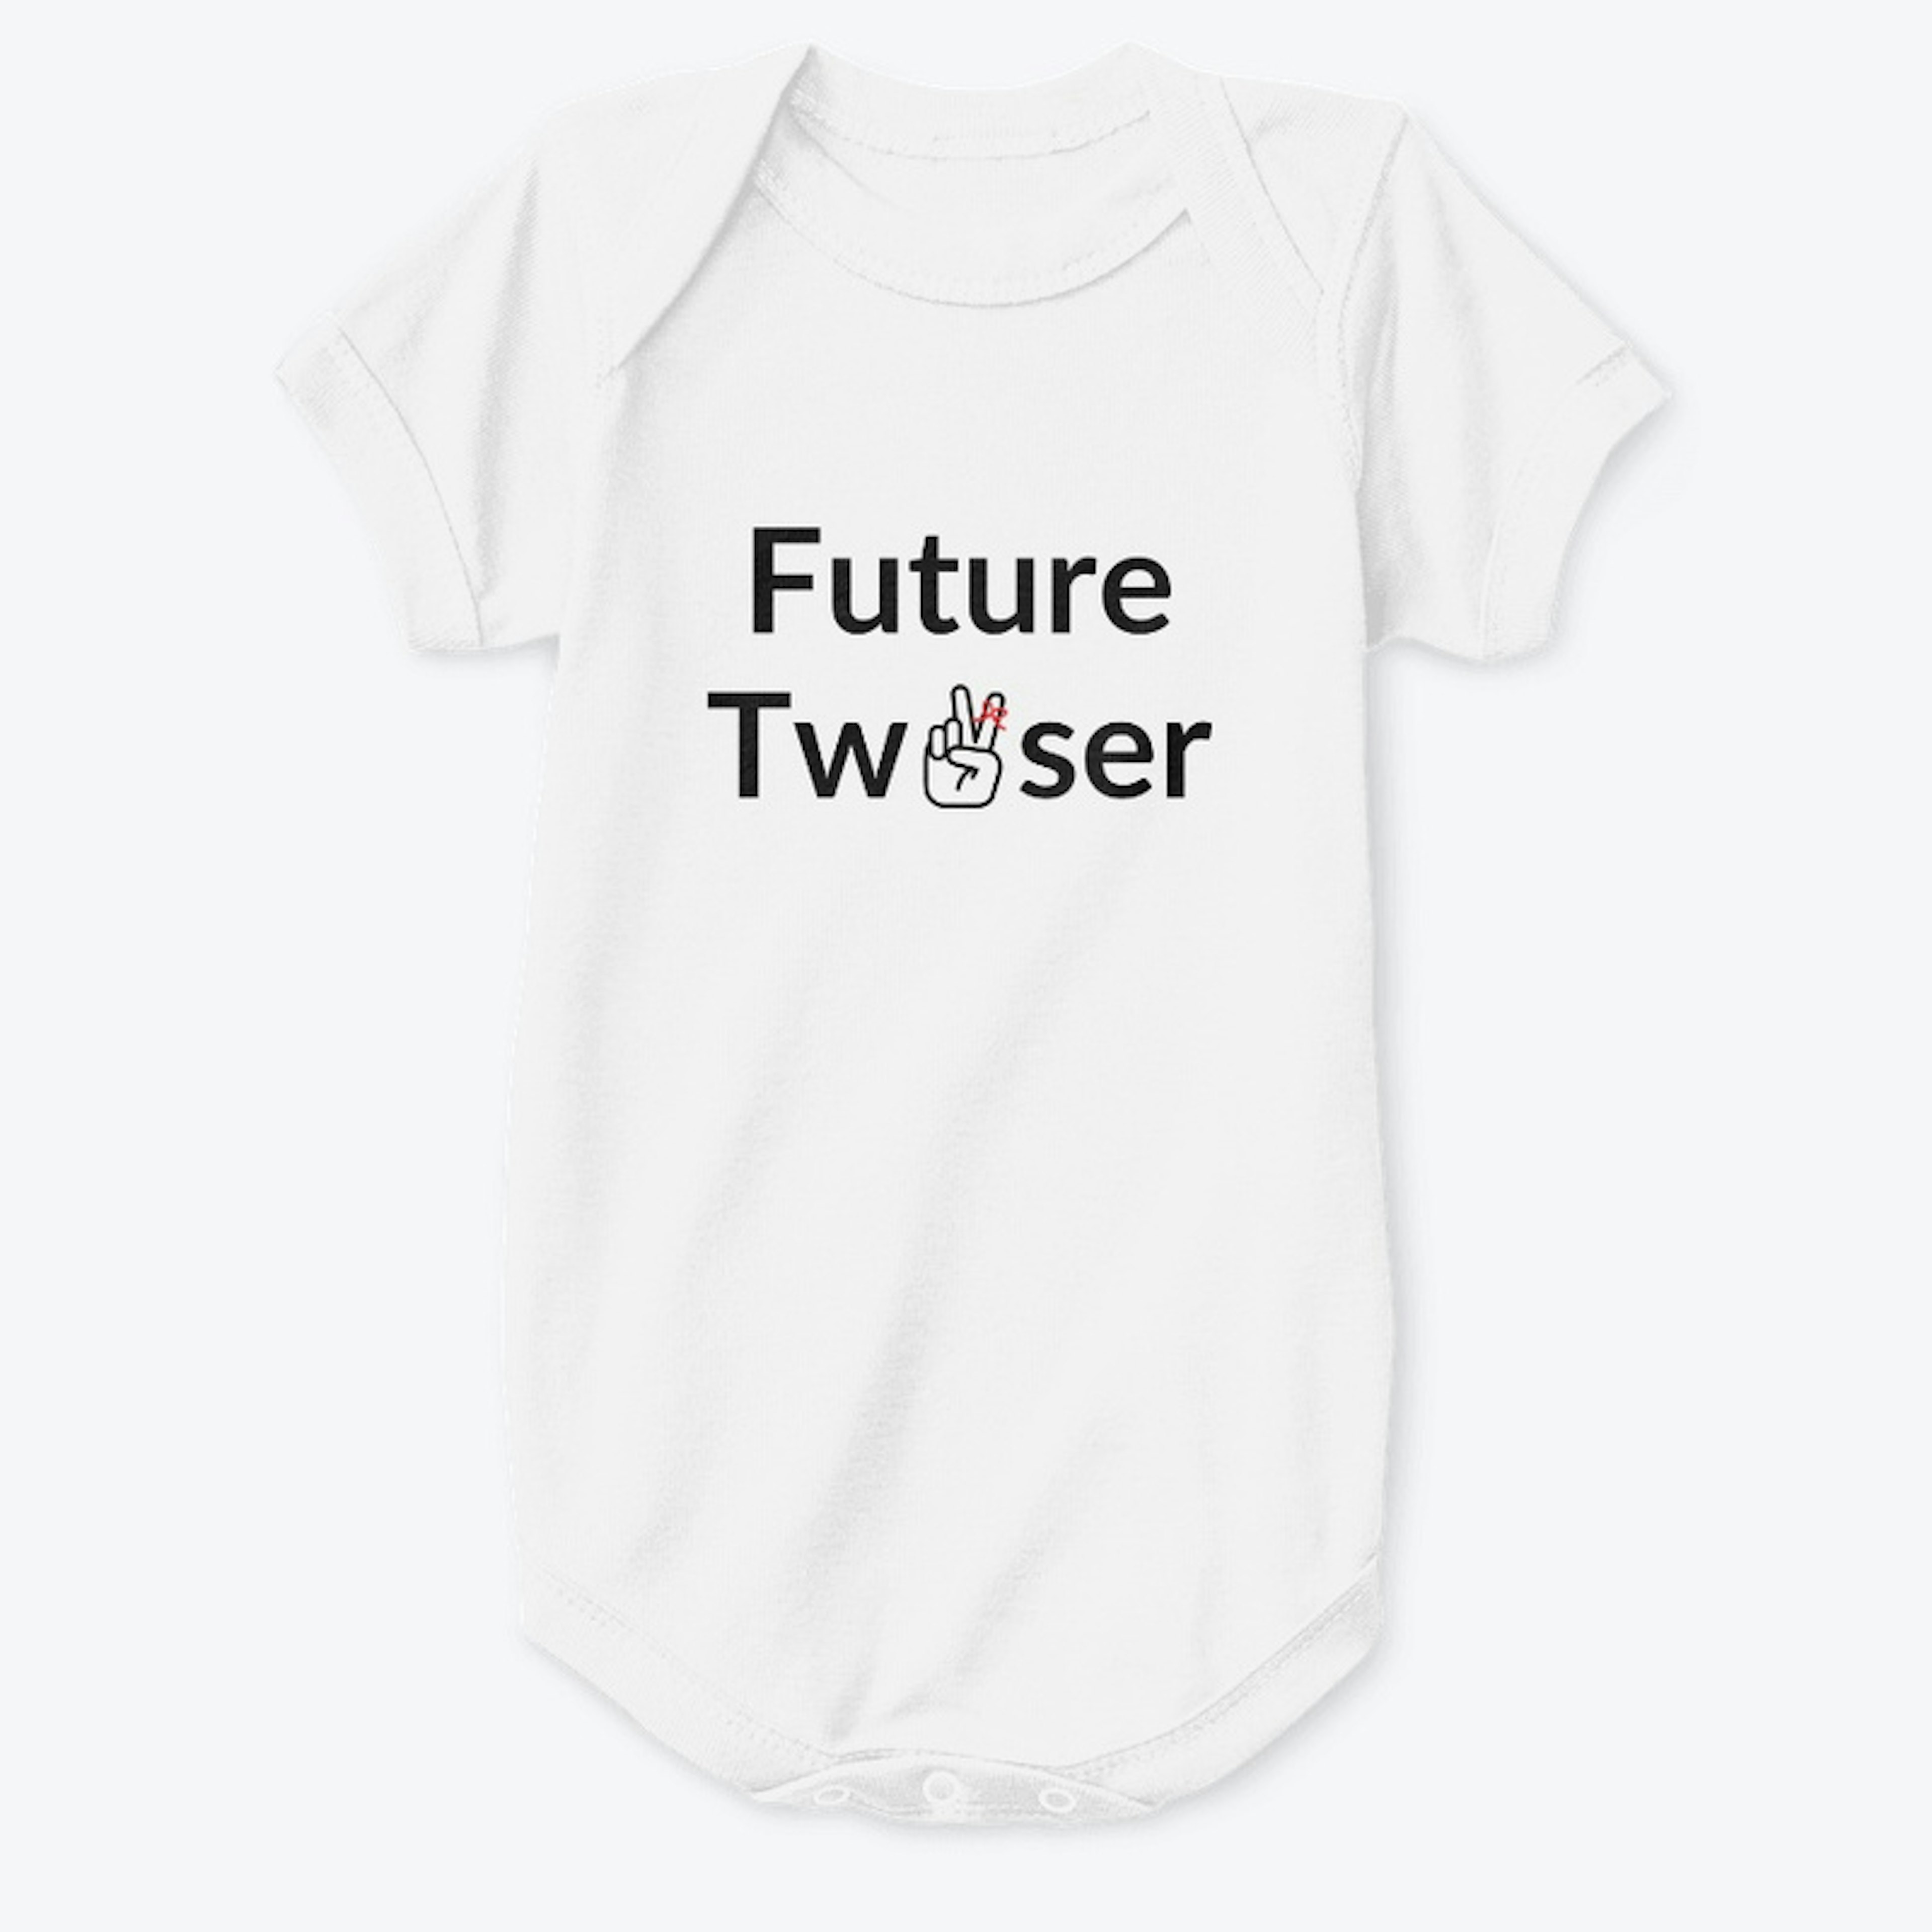 Future Twoser Onesie